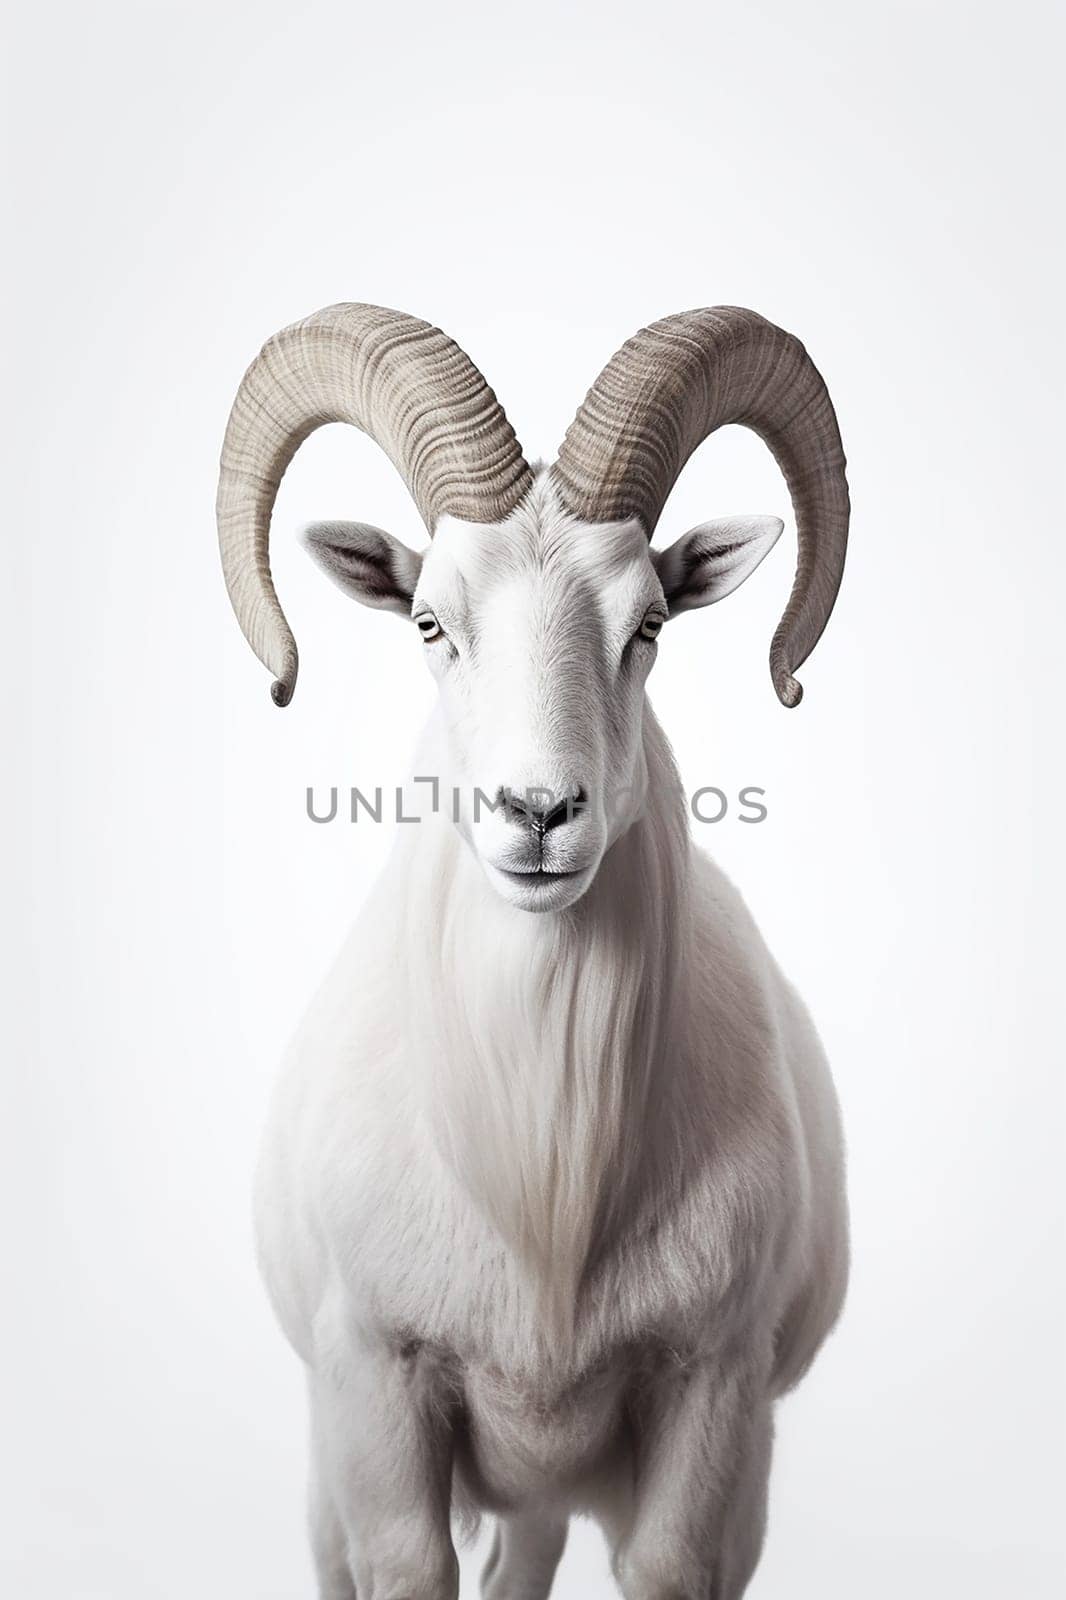 A photo of a farm animal, white goat on white background, real photo